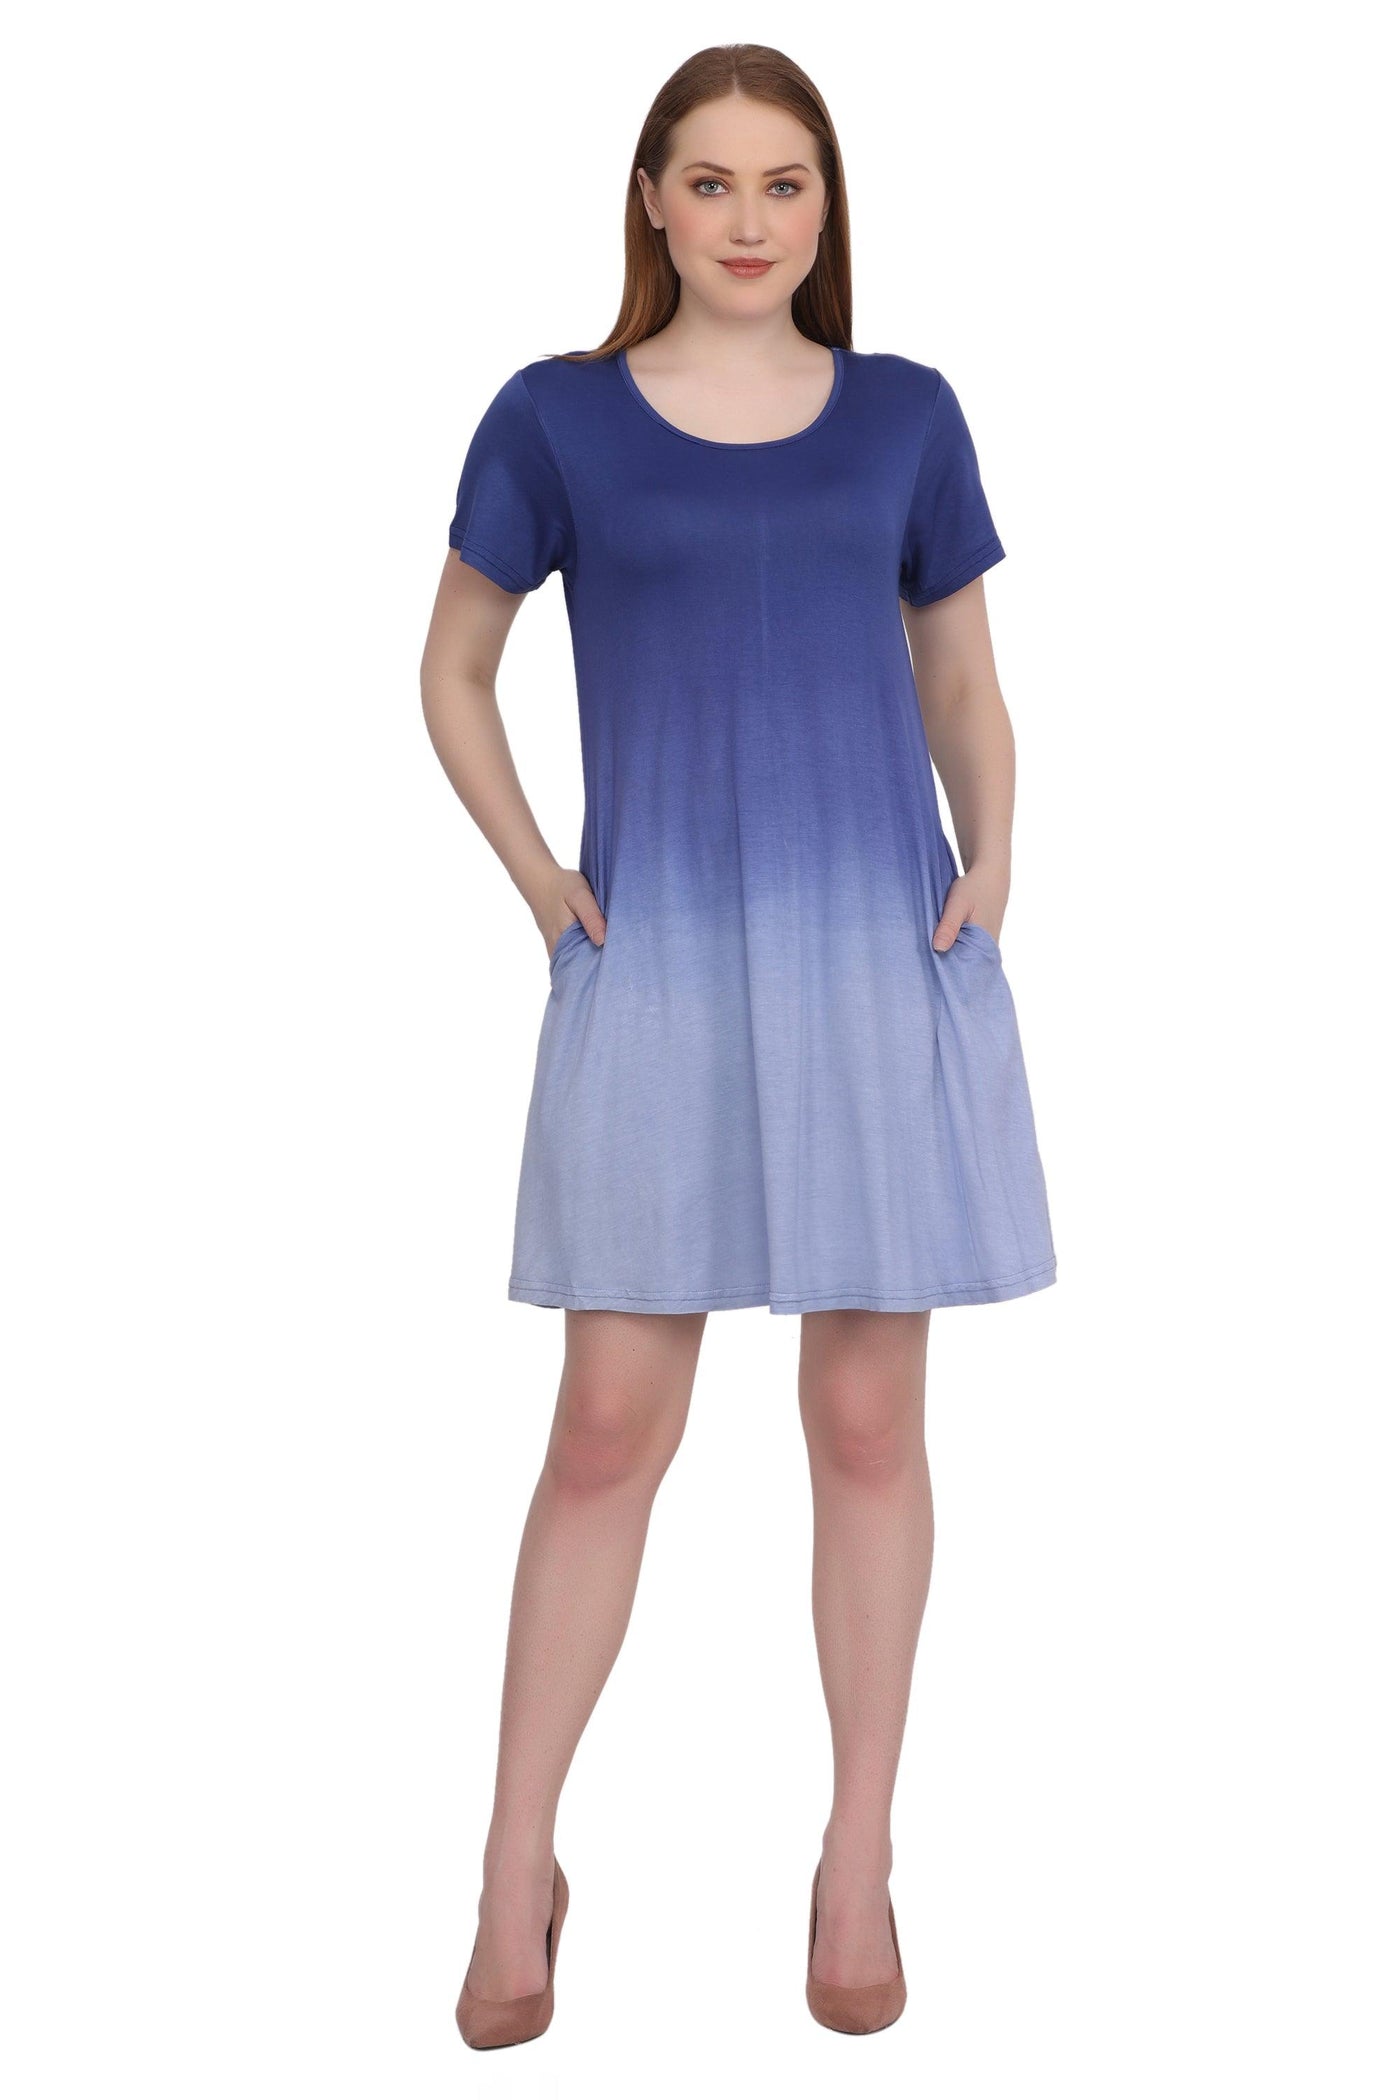 Cap Sleeve Tie Dye Ombre Dress 21460  - Advance Apparels Inc